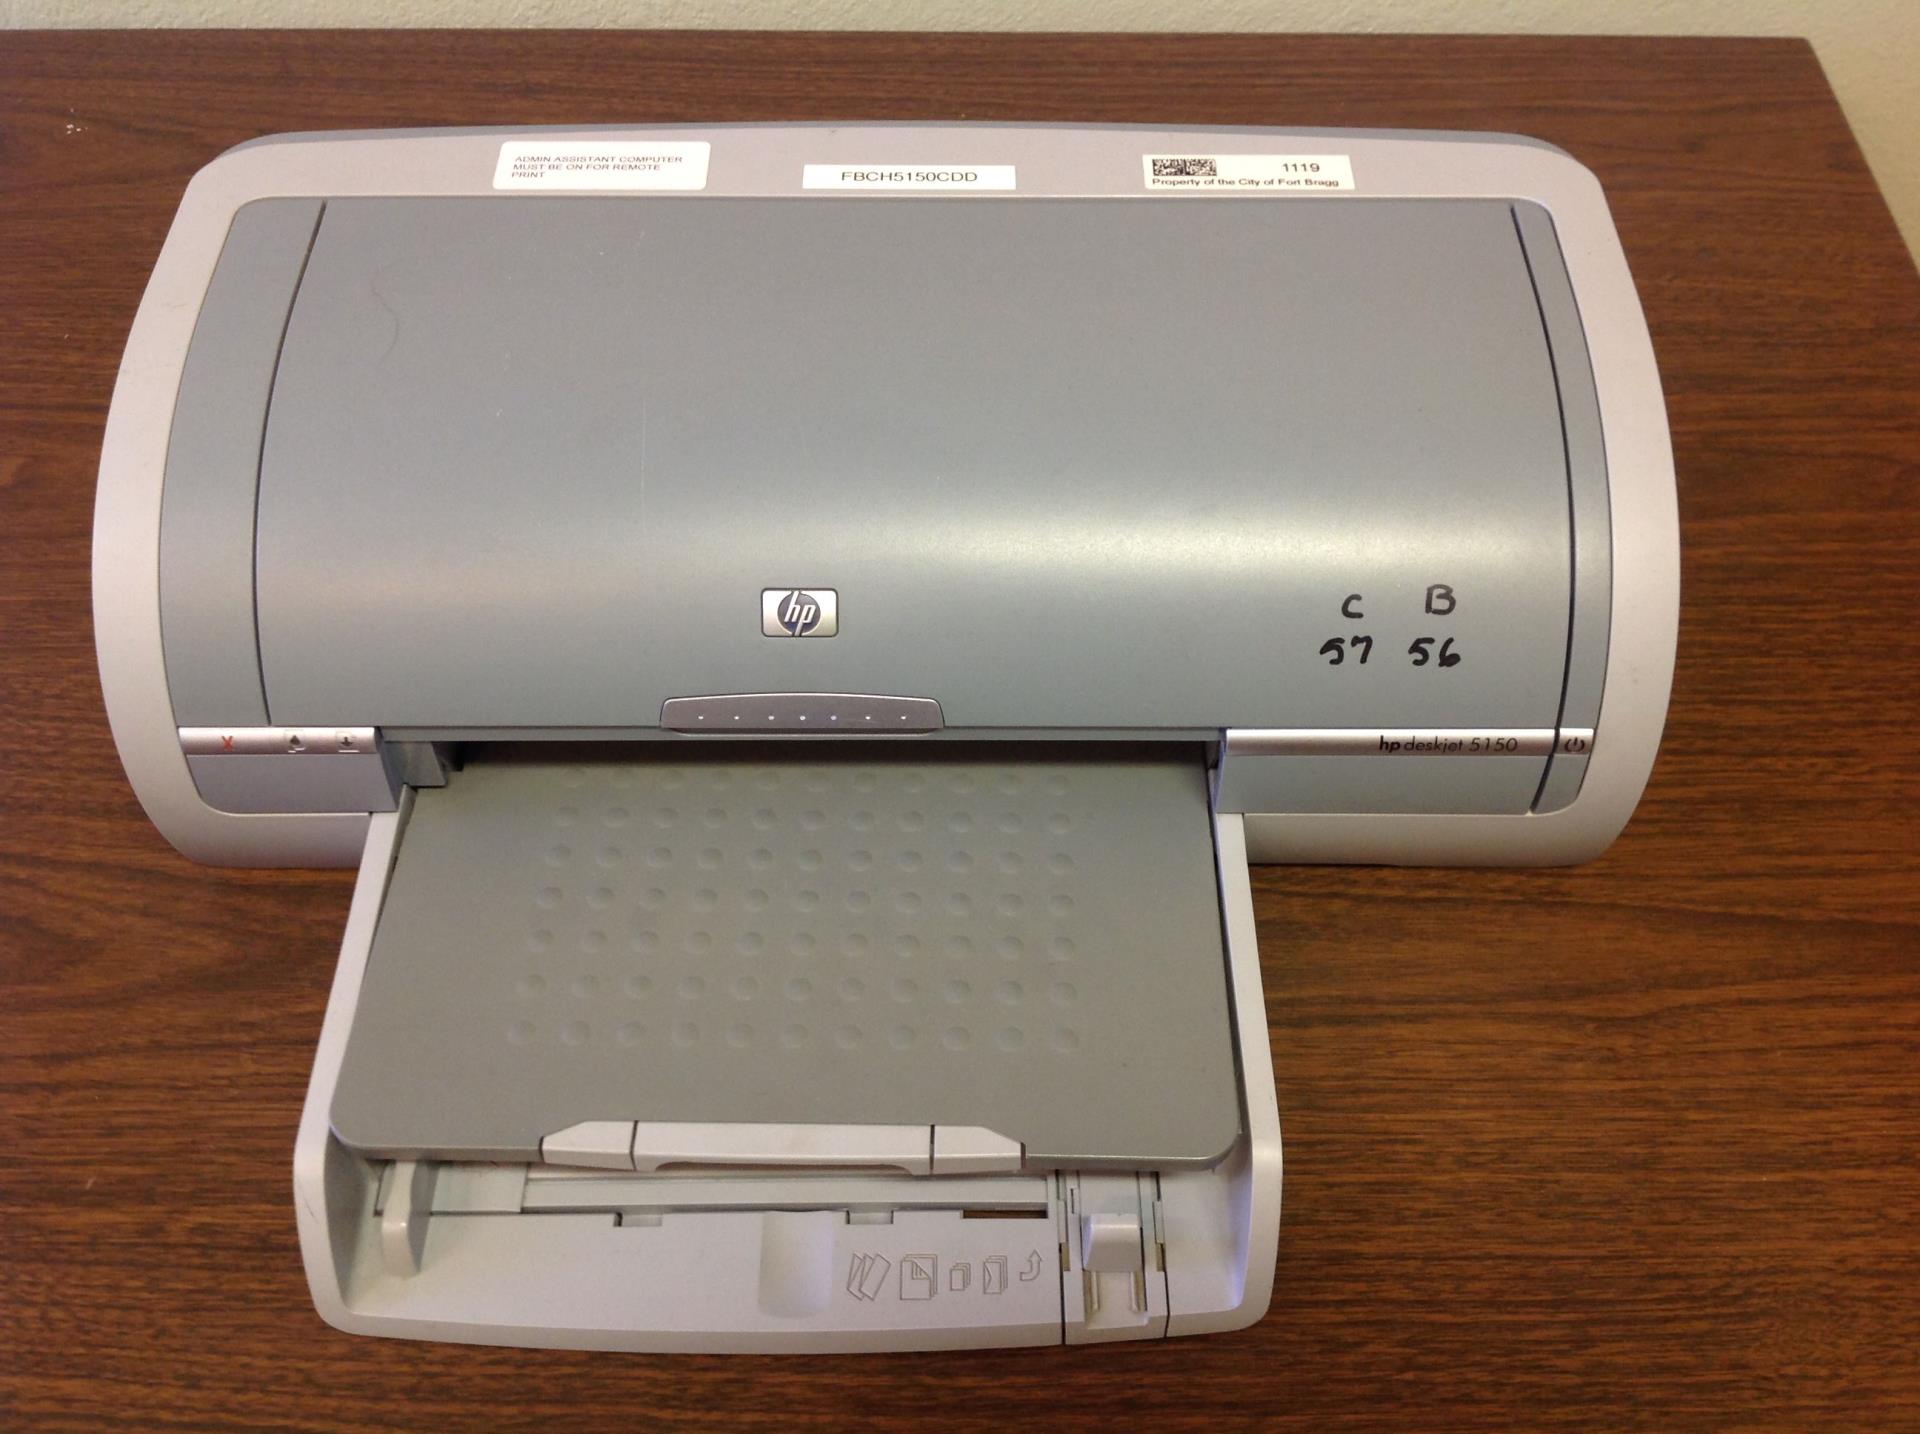 HP 5160 Printer